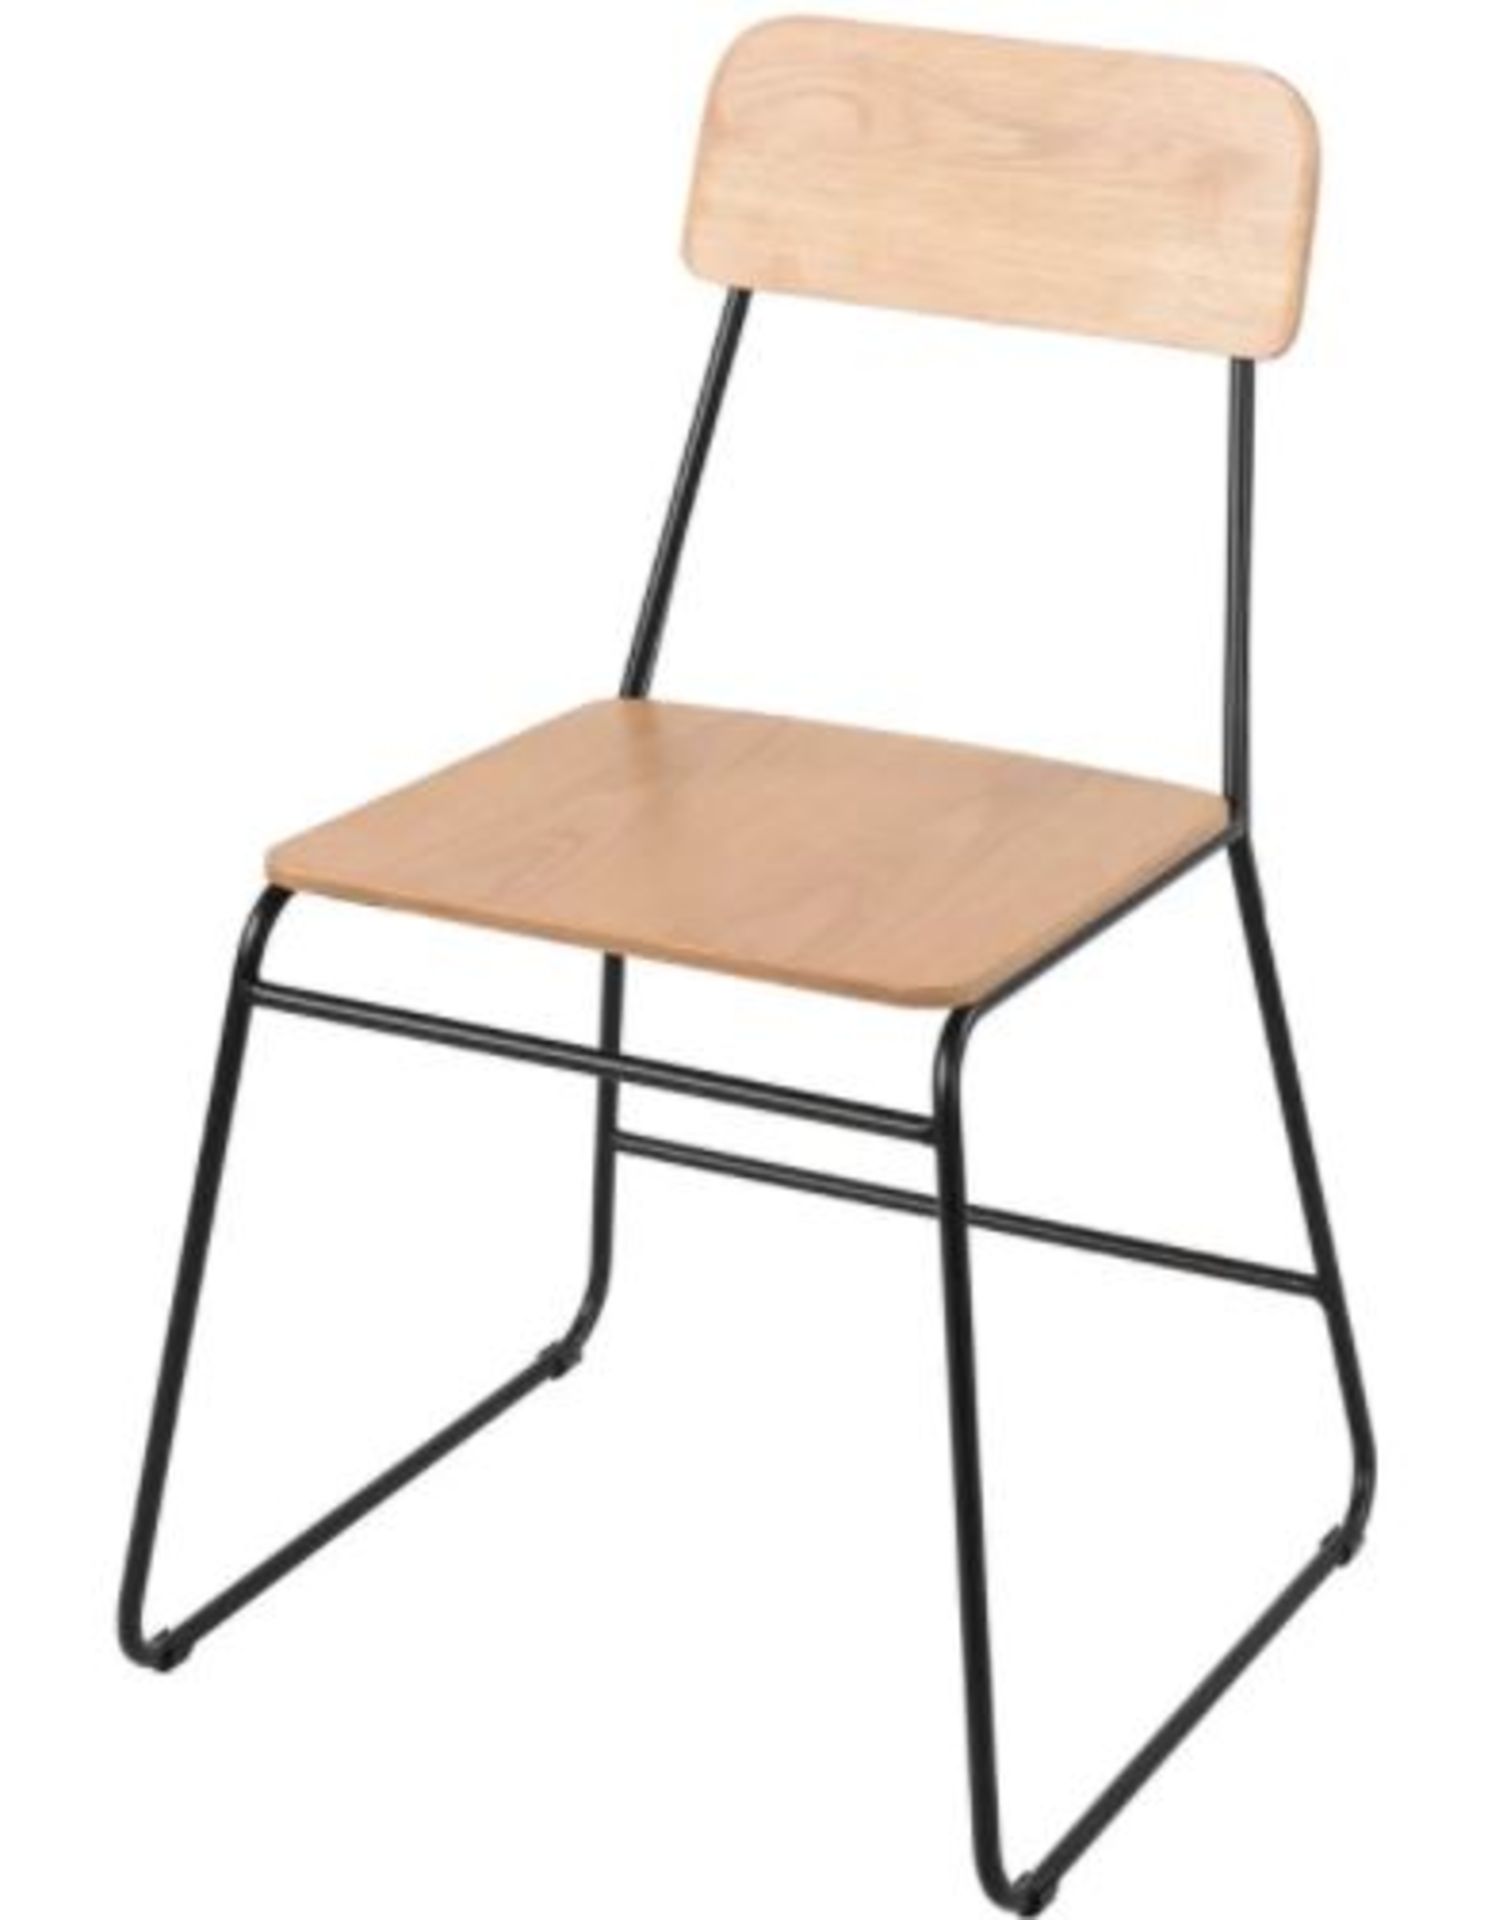 (4O) 4x Black & Oak Veneer Utility Chair RRP £20 Each. (H80x W51x D51cm). All Units Appear As New.